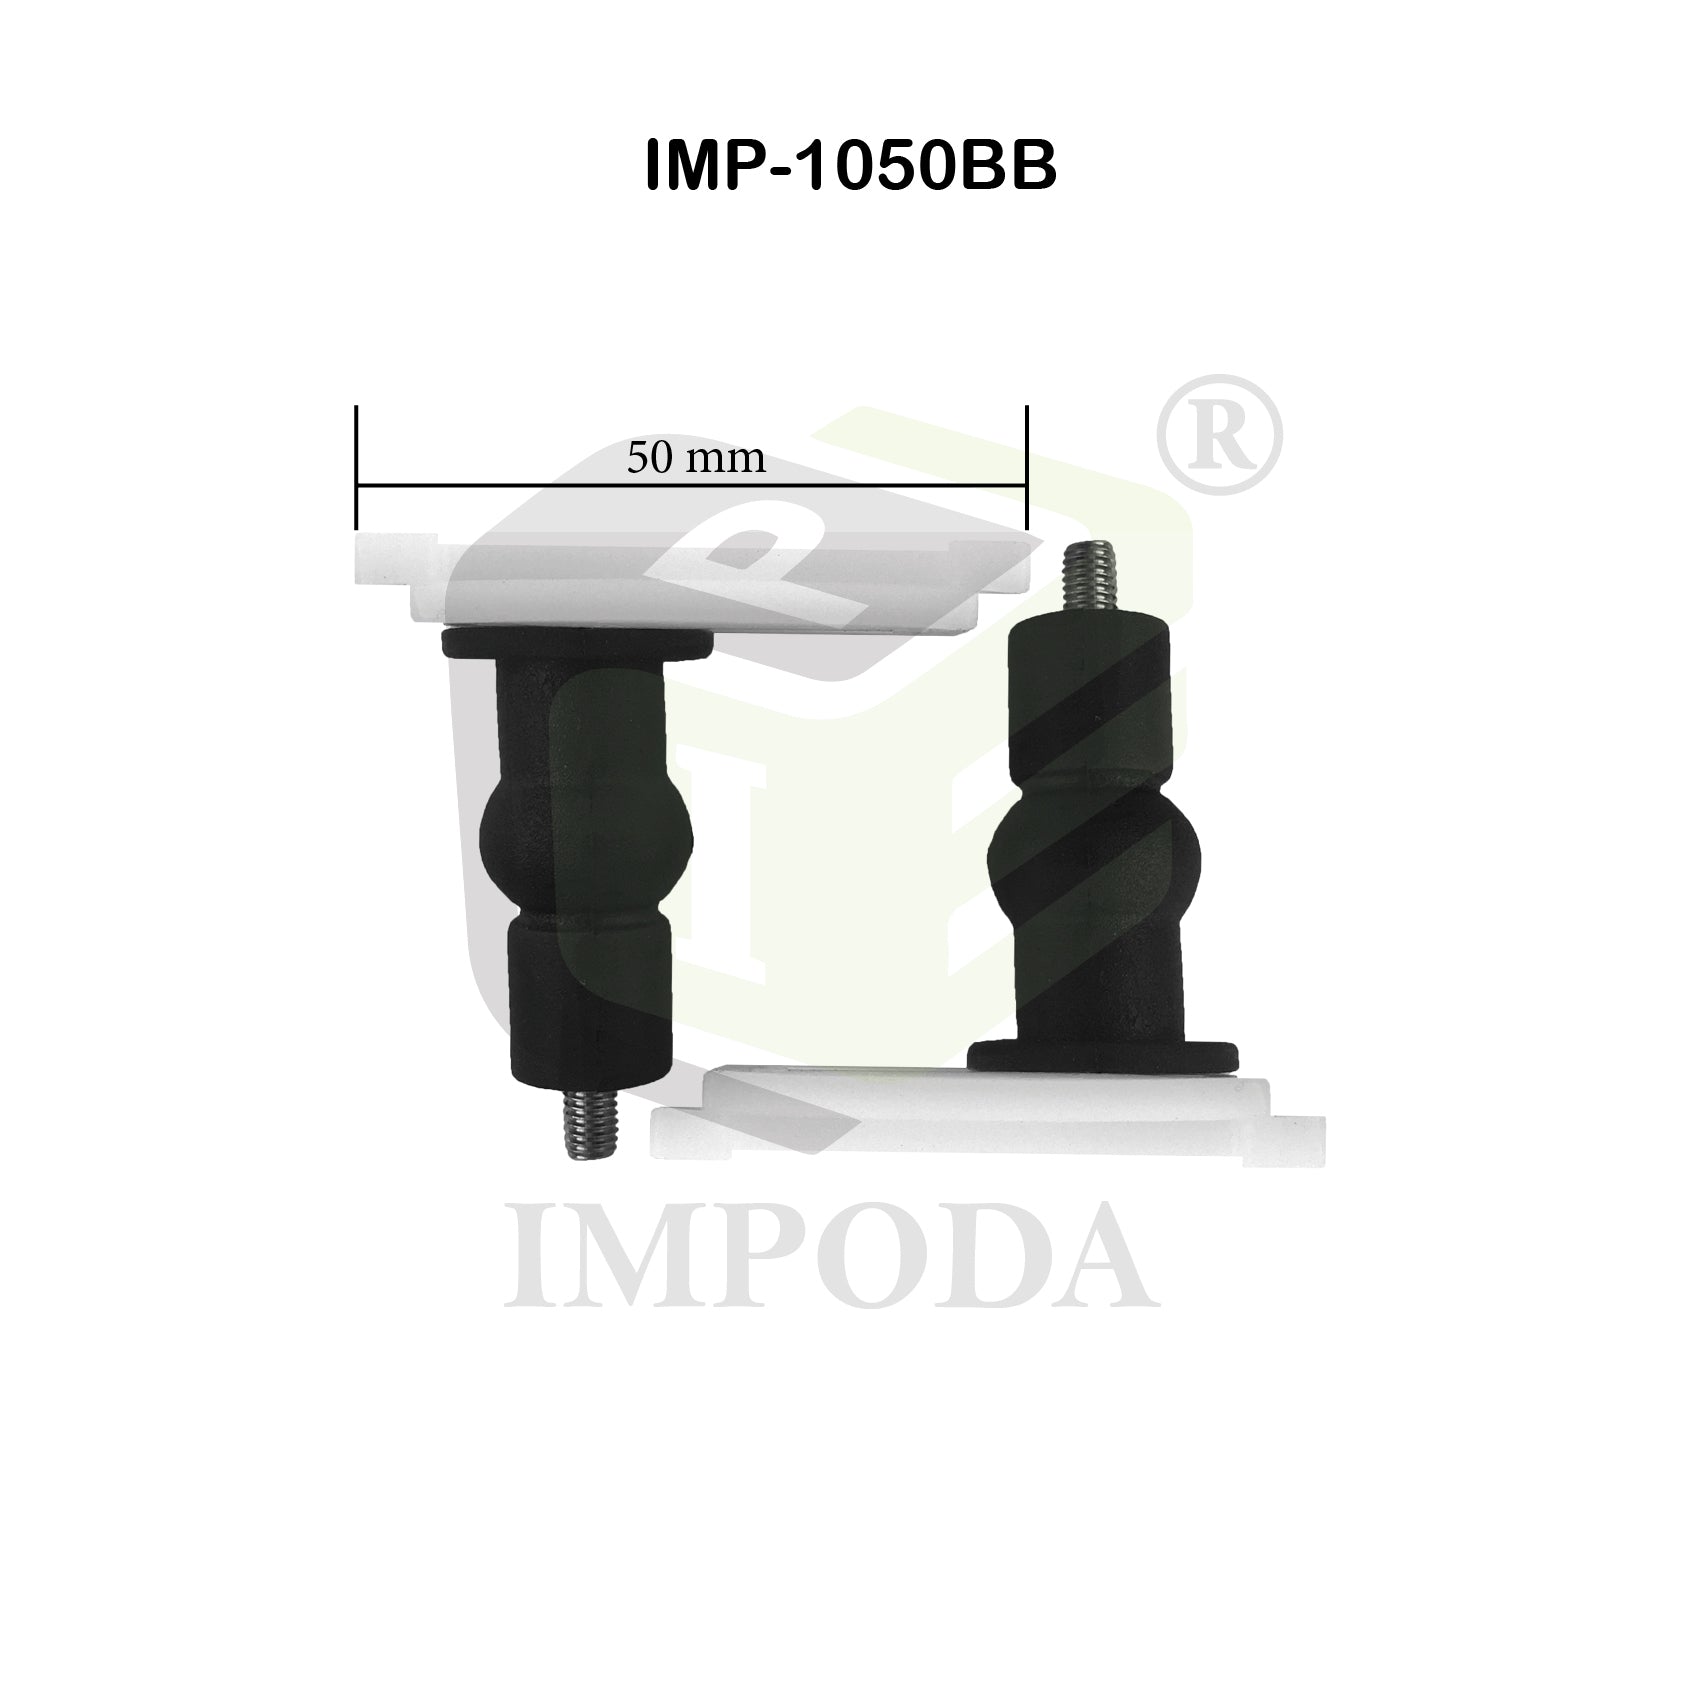 Seat Cover Hinges/IMP-1050BB